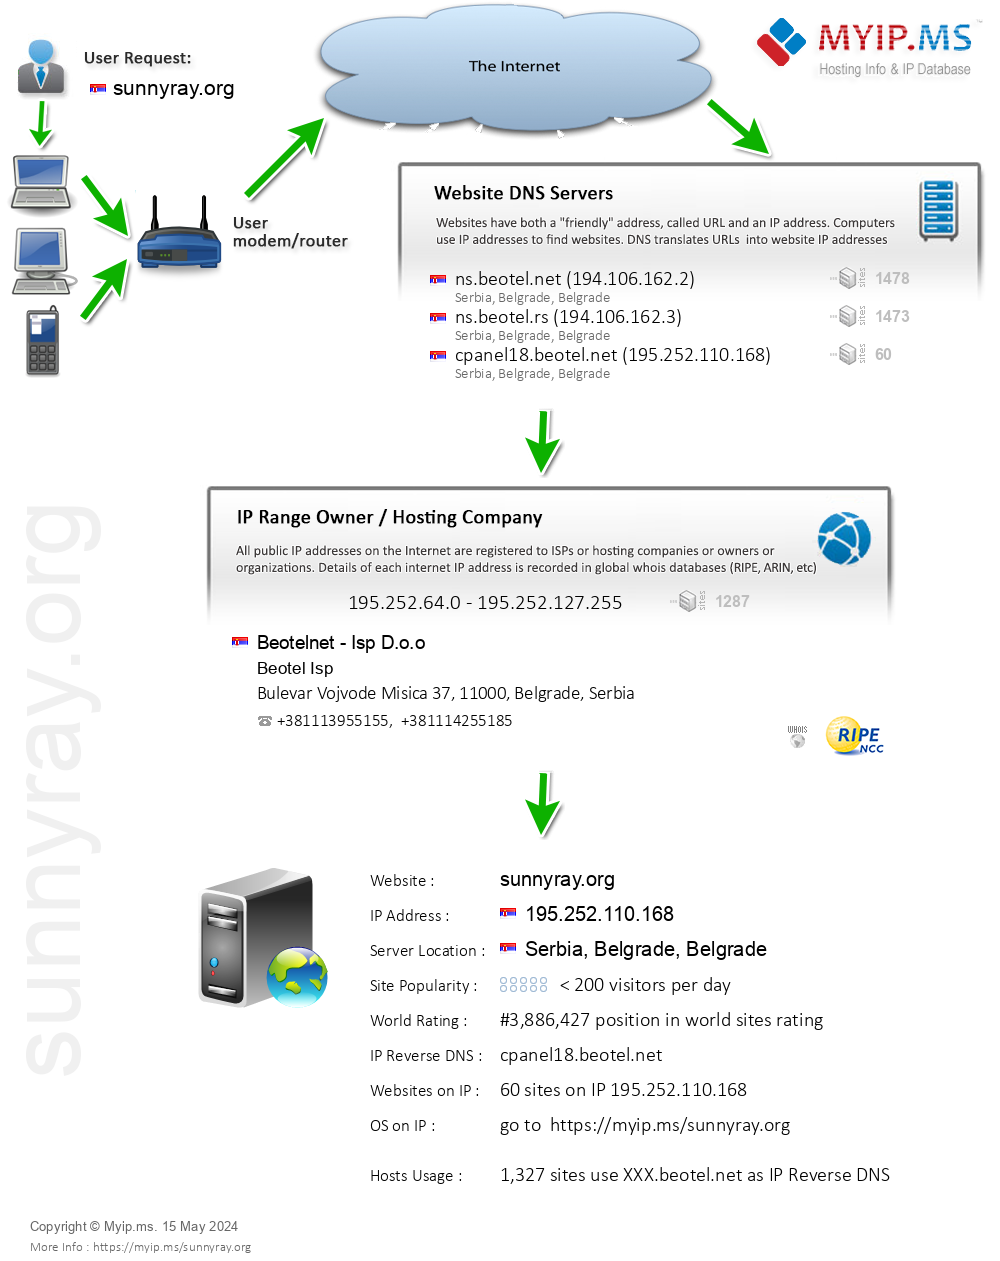 Sunnyray.org - Website Hosting Visual IP Diagram